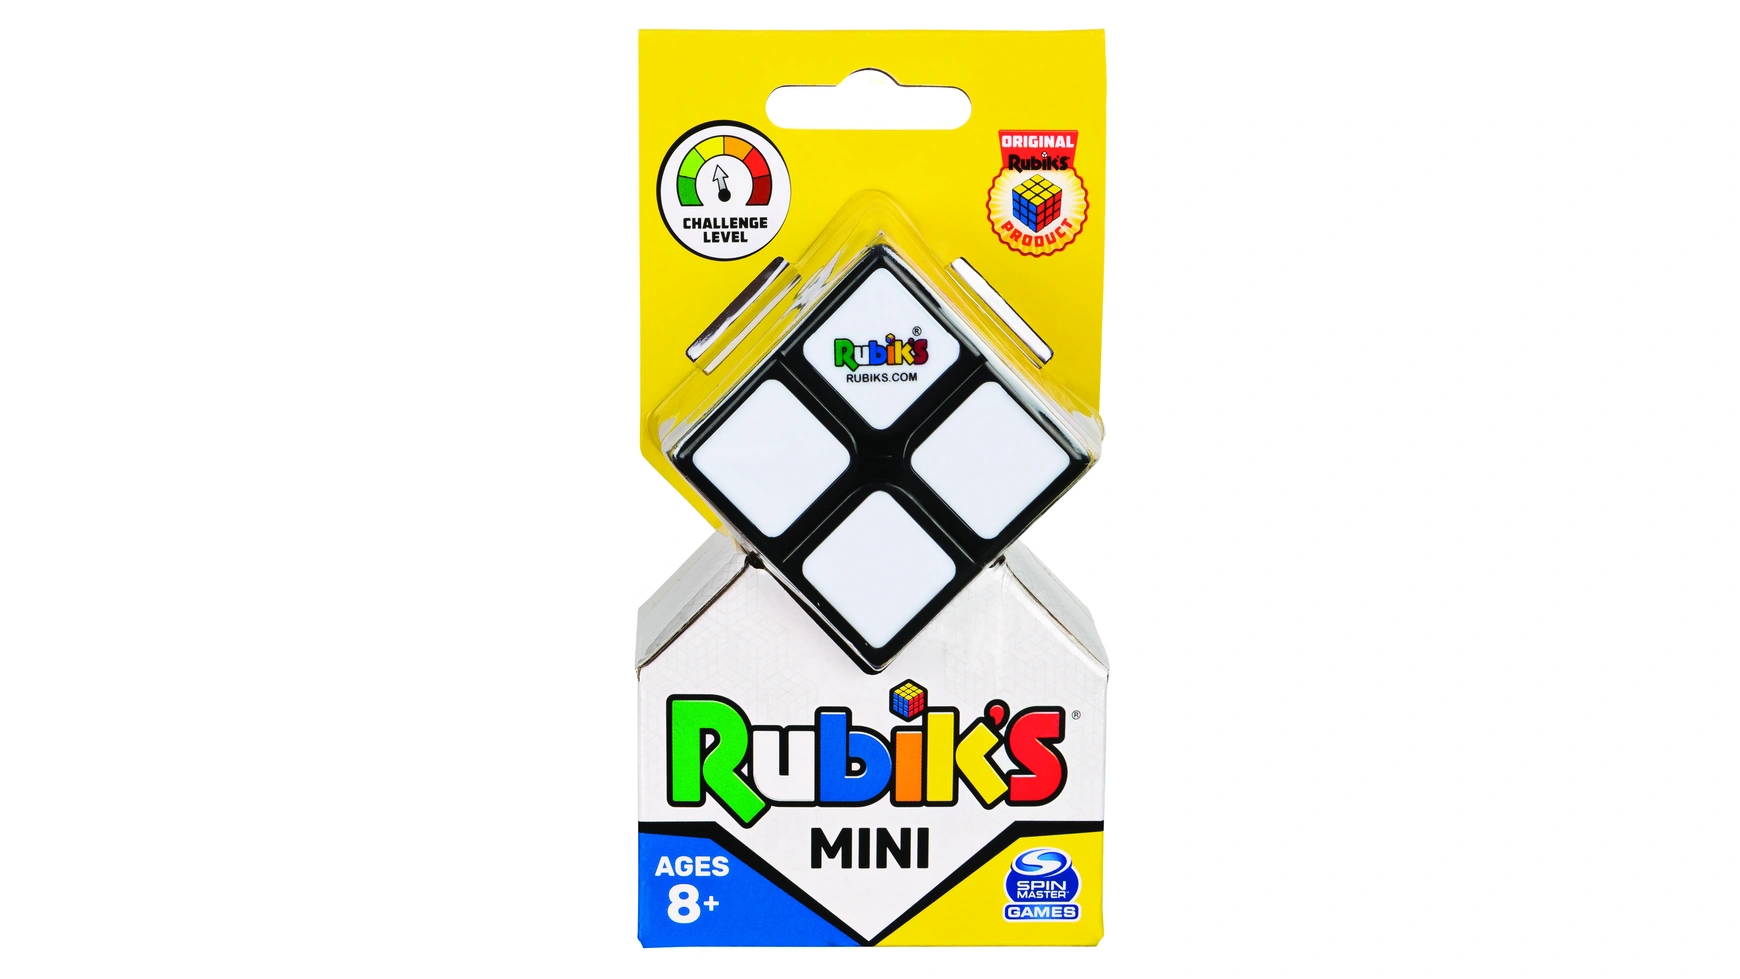 Rubik's Mini 2x2 Кубик Рубика кубик 2x2 для начинающих от 8 лет и для путешествий Spin Master 2x2 moyu mfjs meilong color